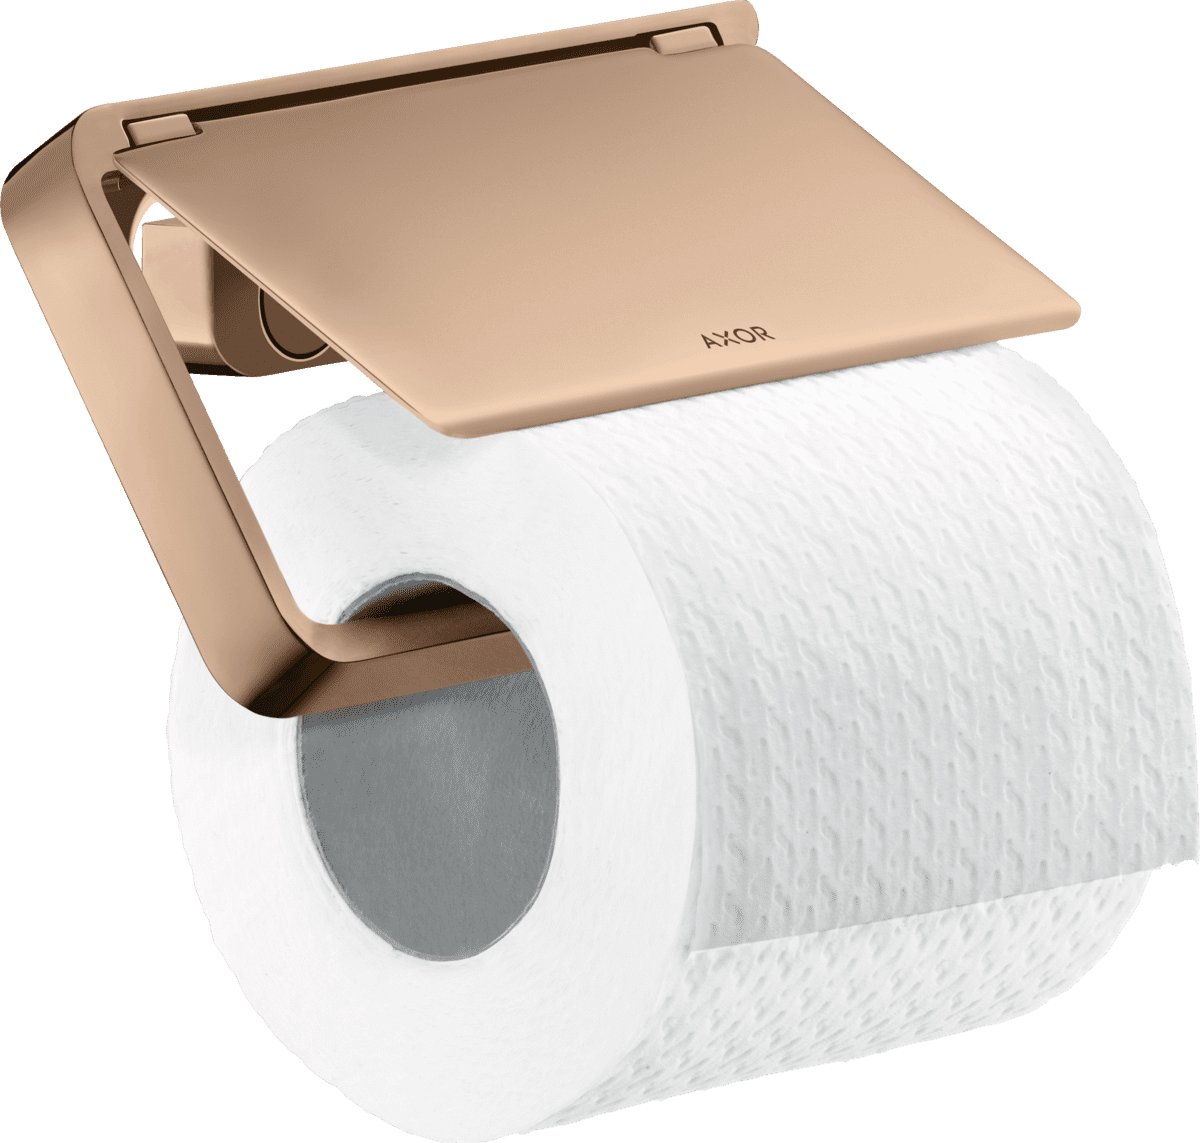 HANSGROHE AXOR Universal Softsquare Tuvalet kağıtlığı kapaklı #42836300 - Parlak Kırmızı Altın resmi